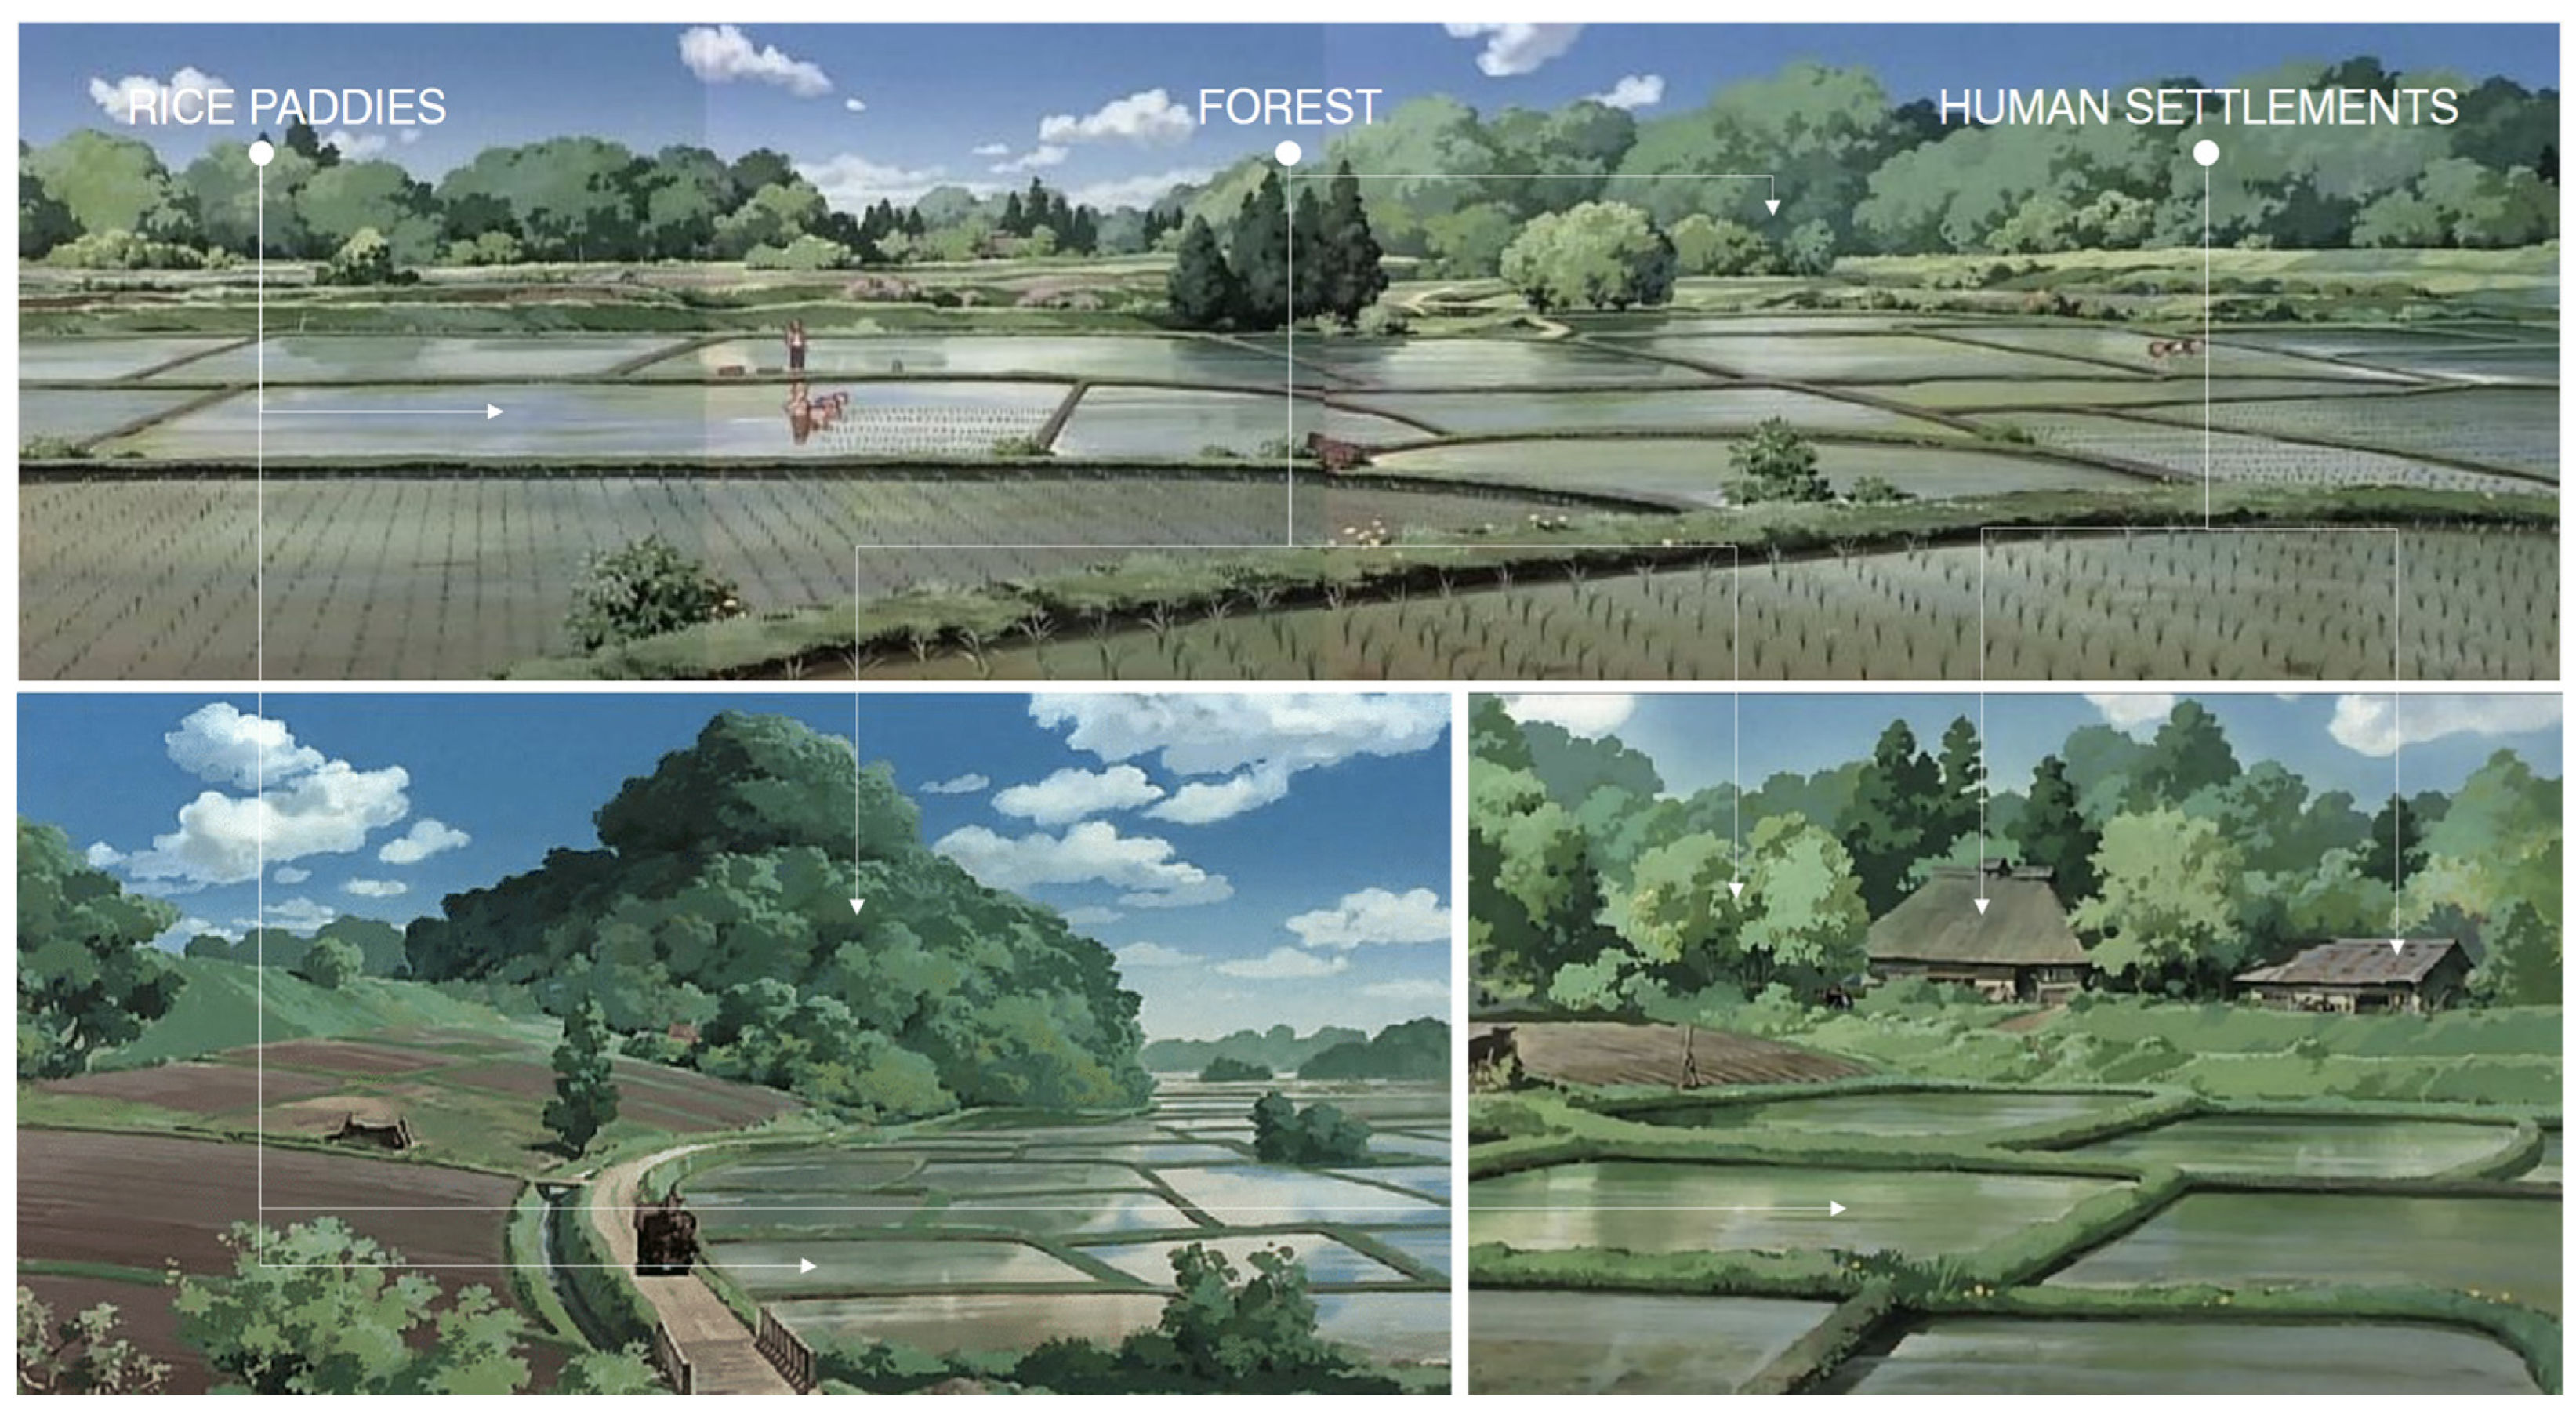 Ghibli Blog: Studio Ghibli, Animation and the Movies: The Duality